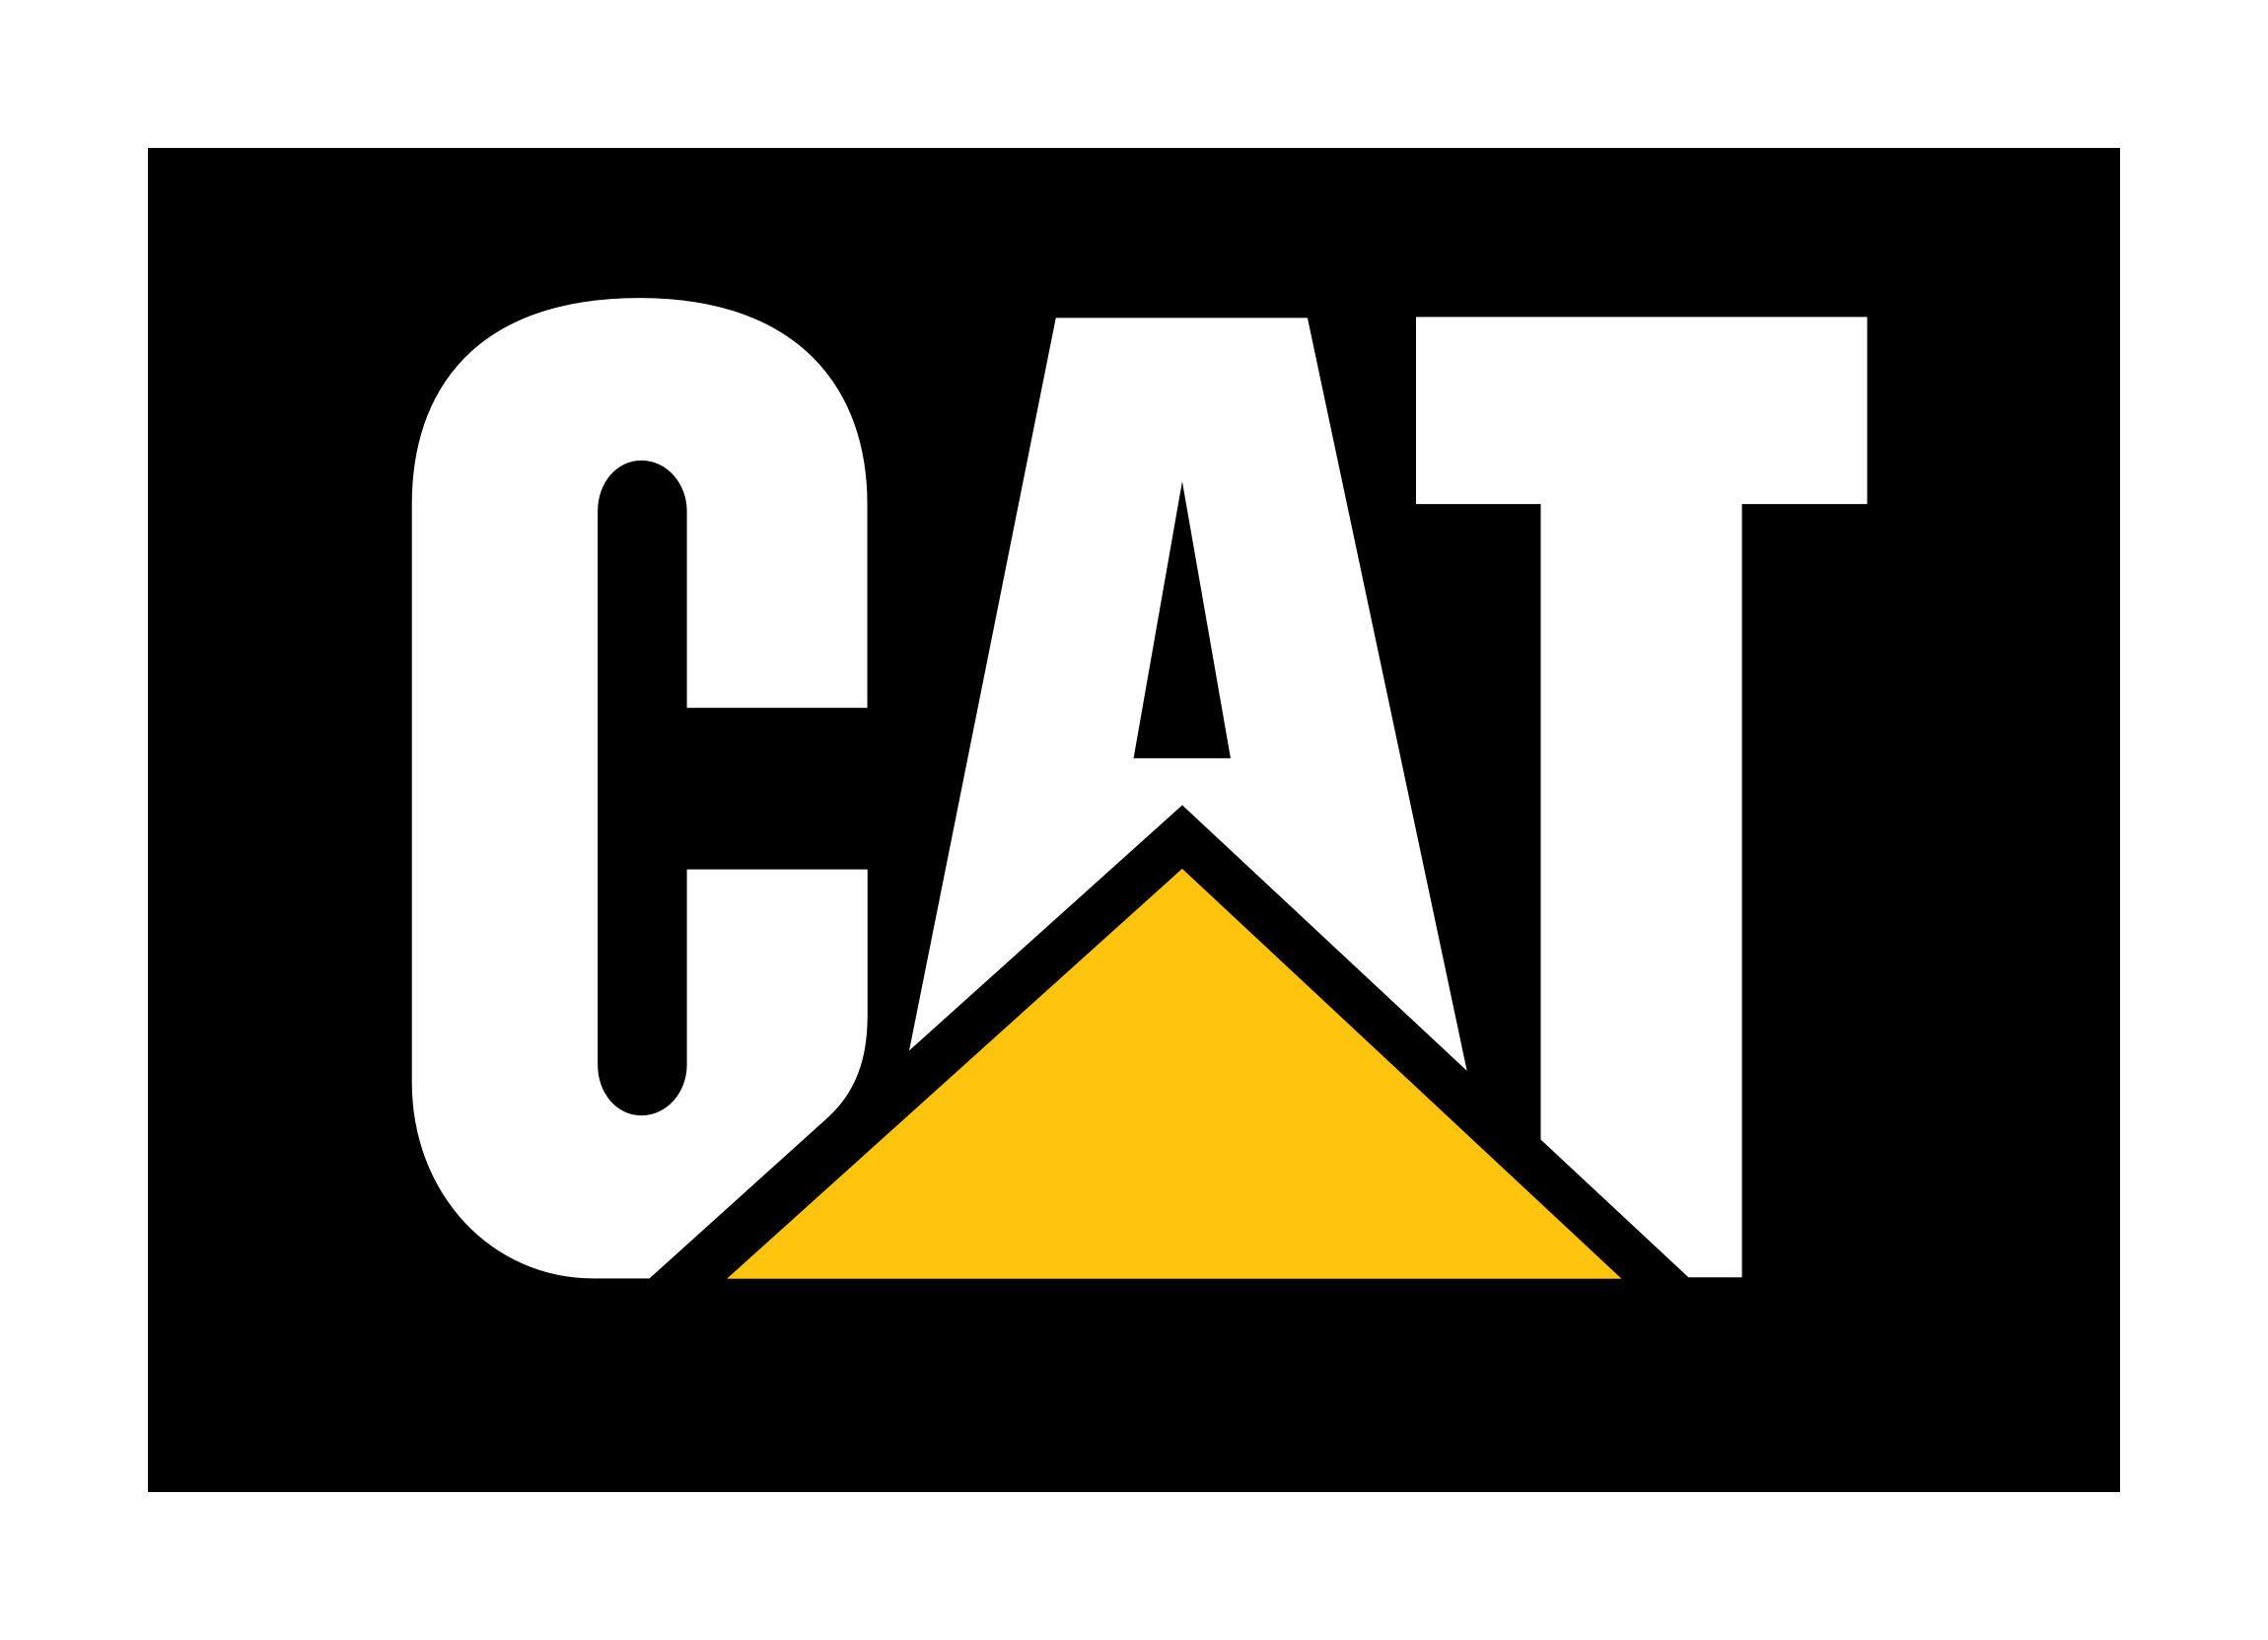 Yellow Triangle Logo - Caterpillar Logo, Caterprillar Symbol Meaning, History and Evolution